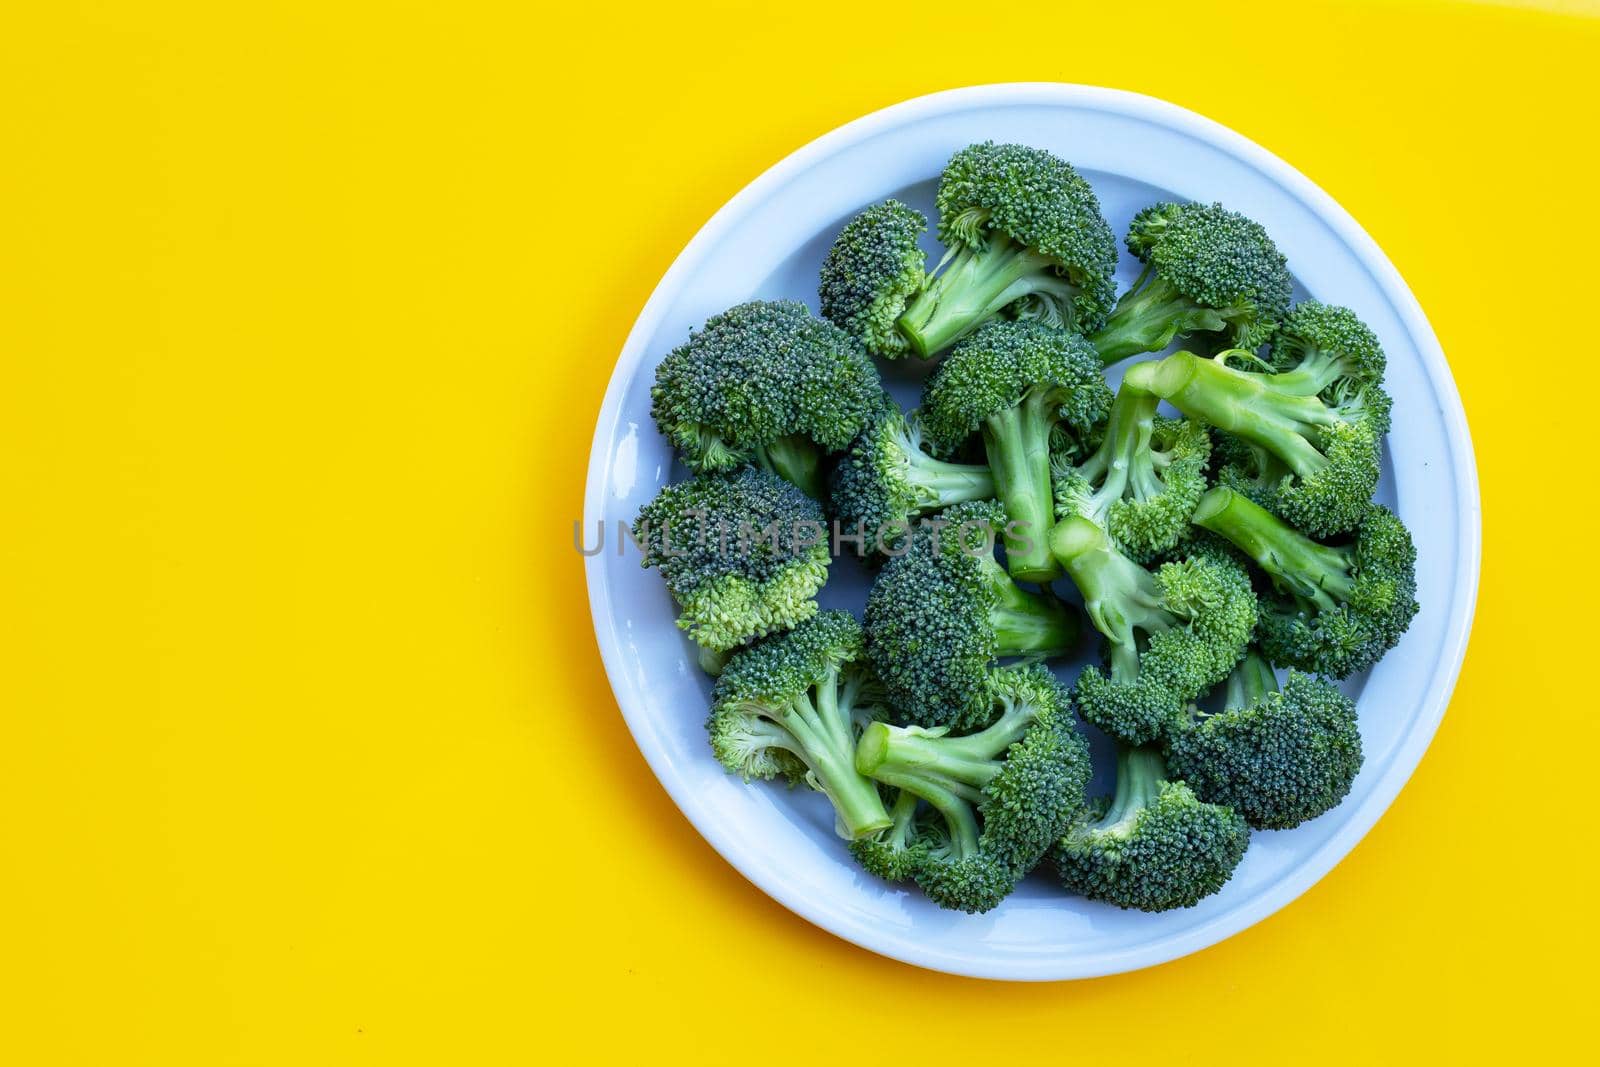 Fresh green broccoli on yellow background.